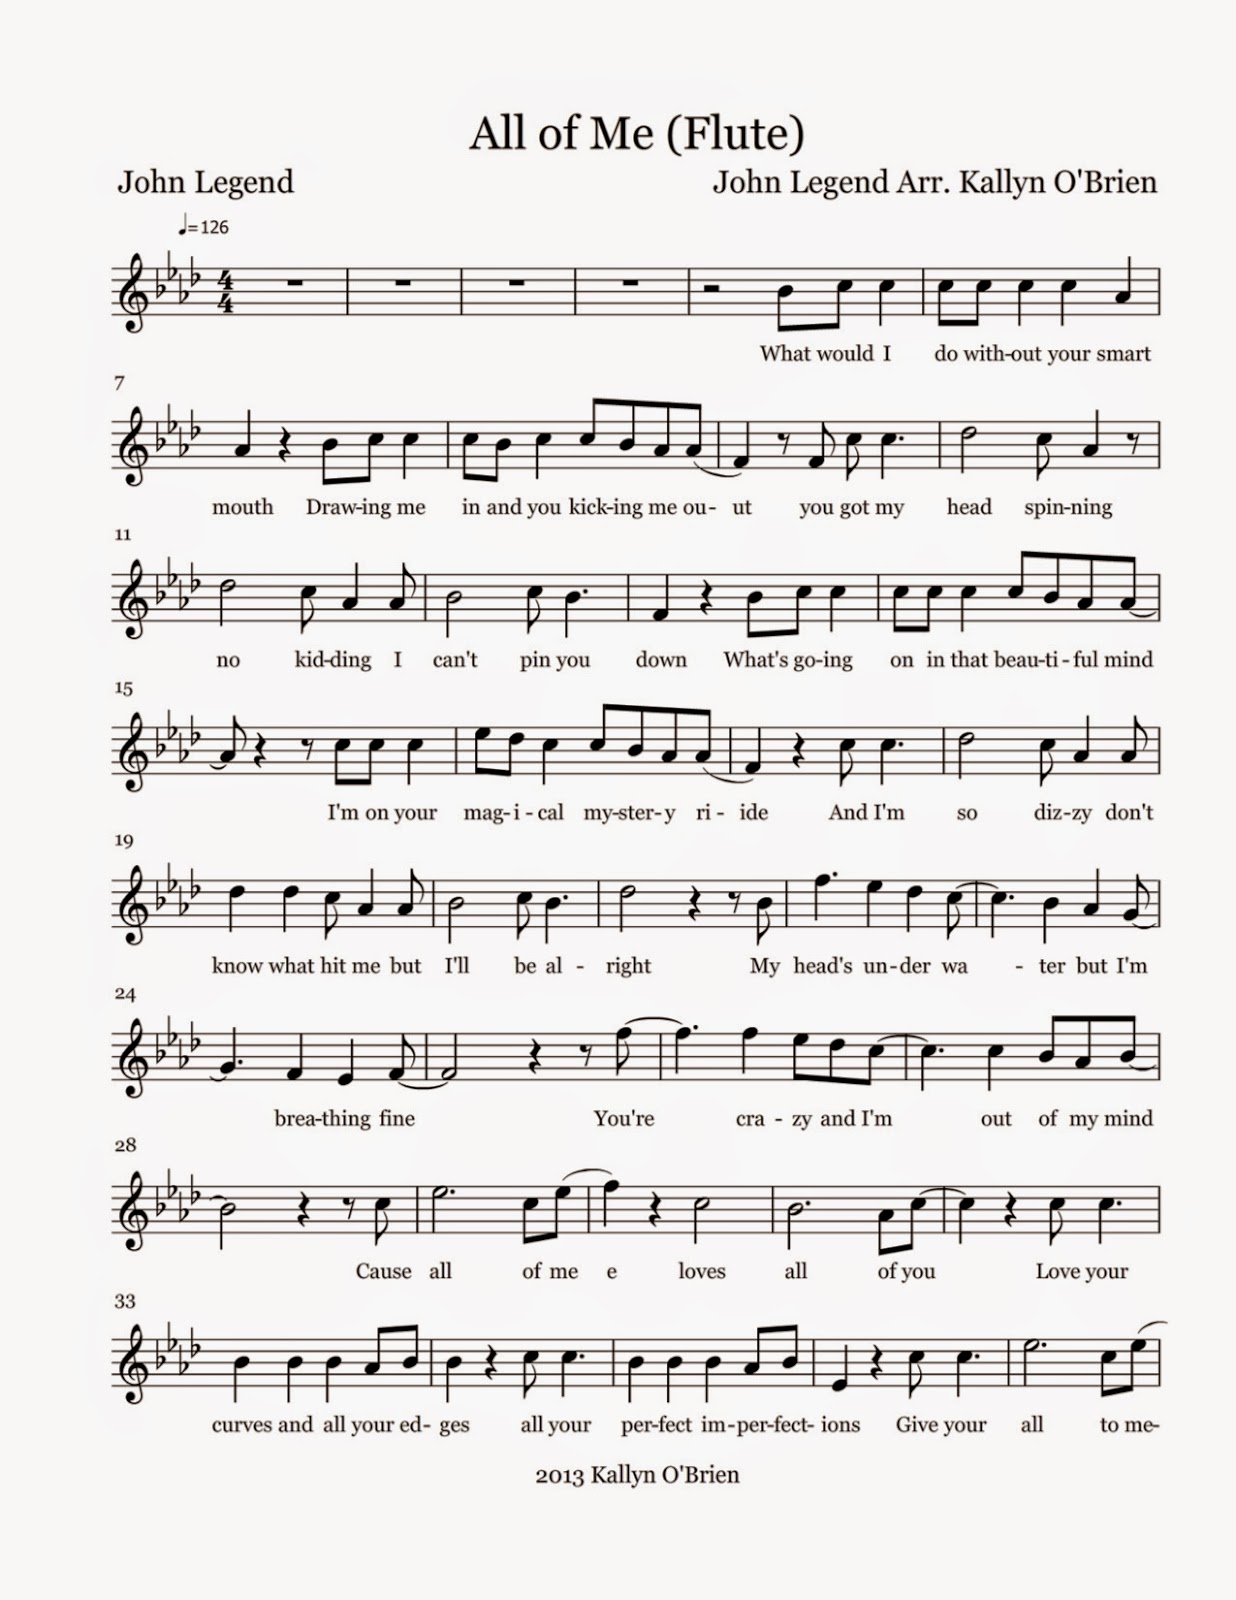 Flute Sheet Music: All of Me - Sheet Music